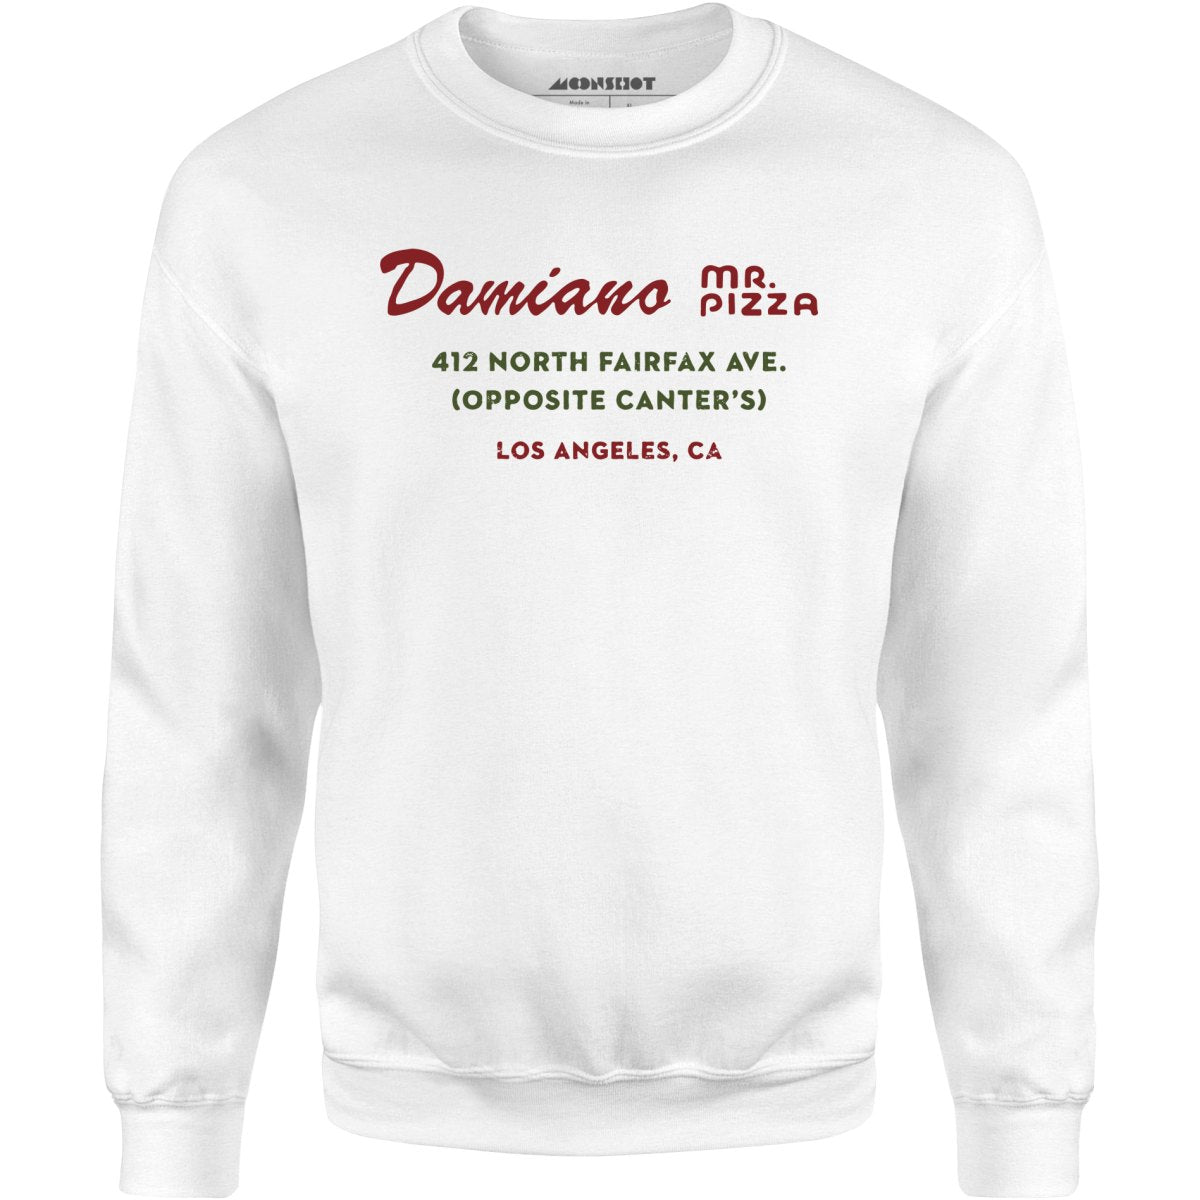 Damiano Mr. Pizza - Los Angeles, CA - Vintage Restaurant - Unisex Sweatshirt